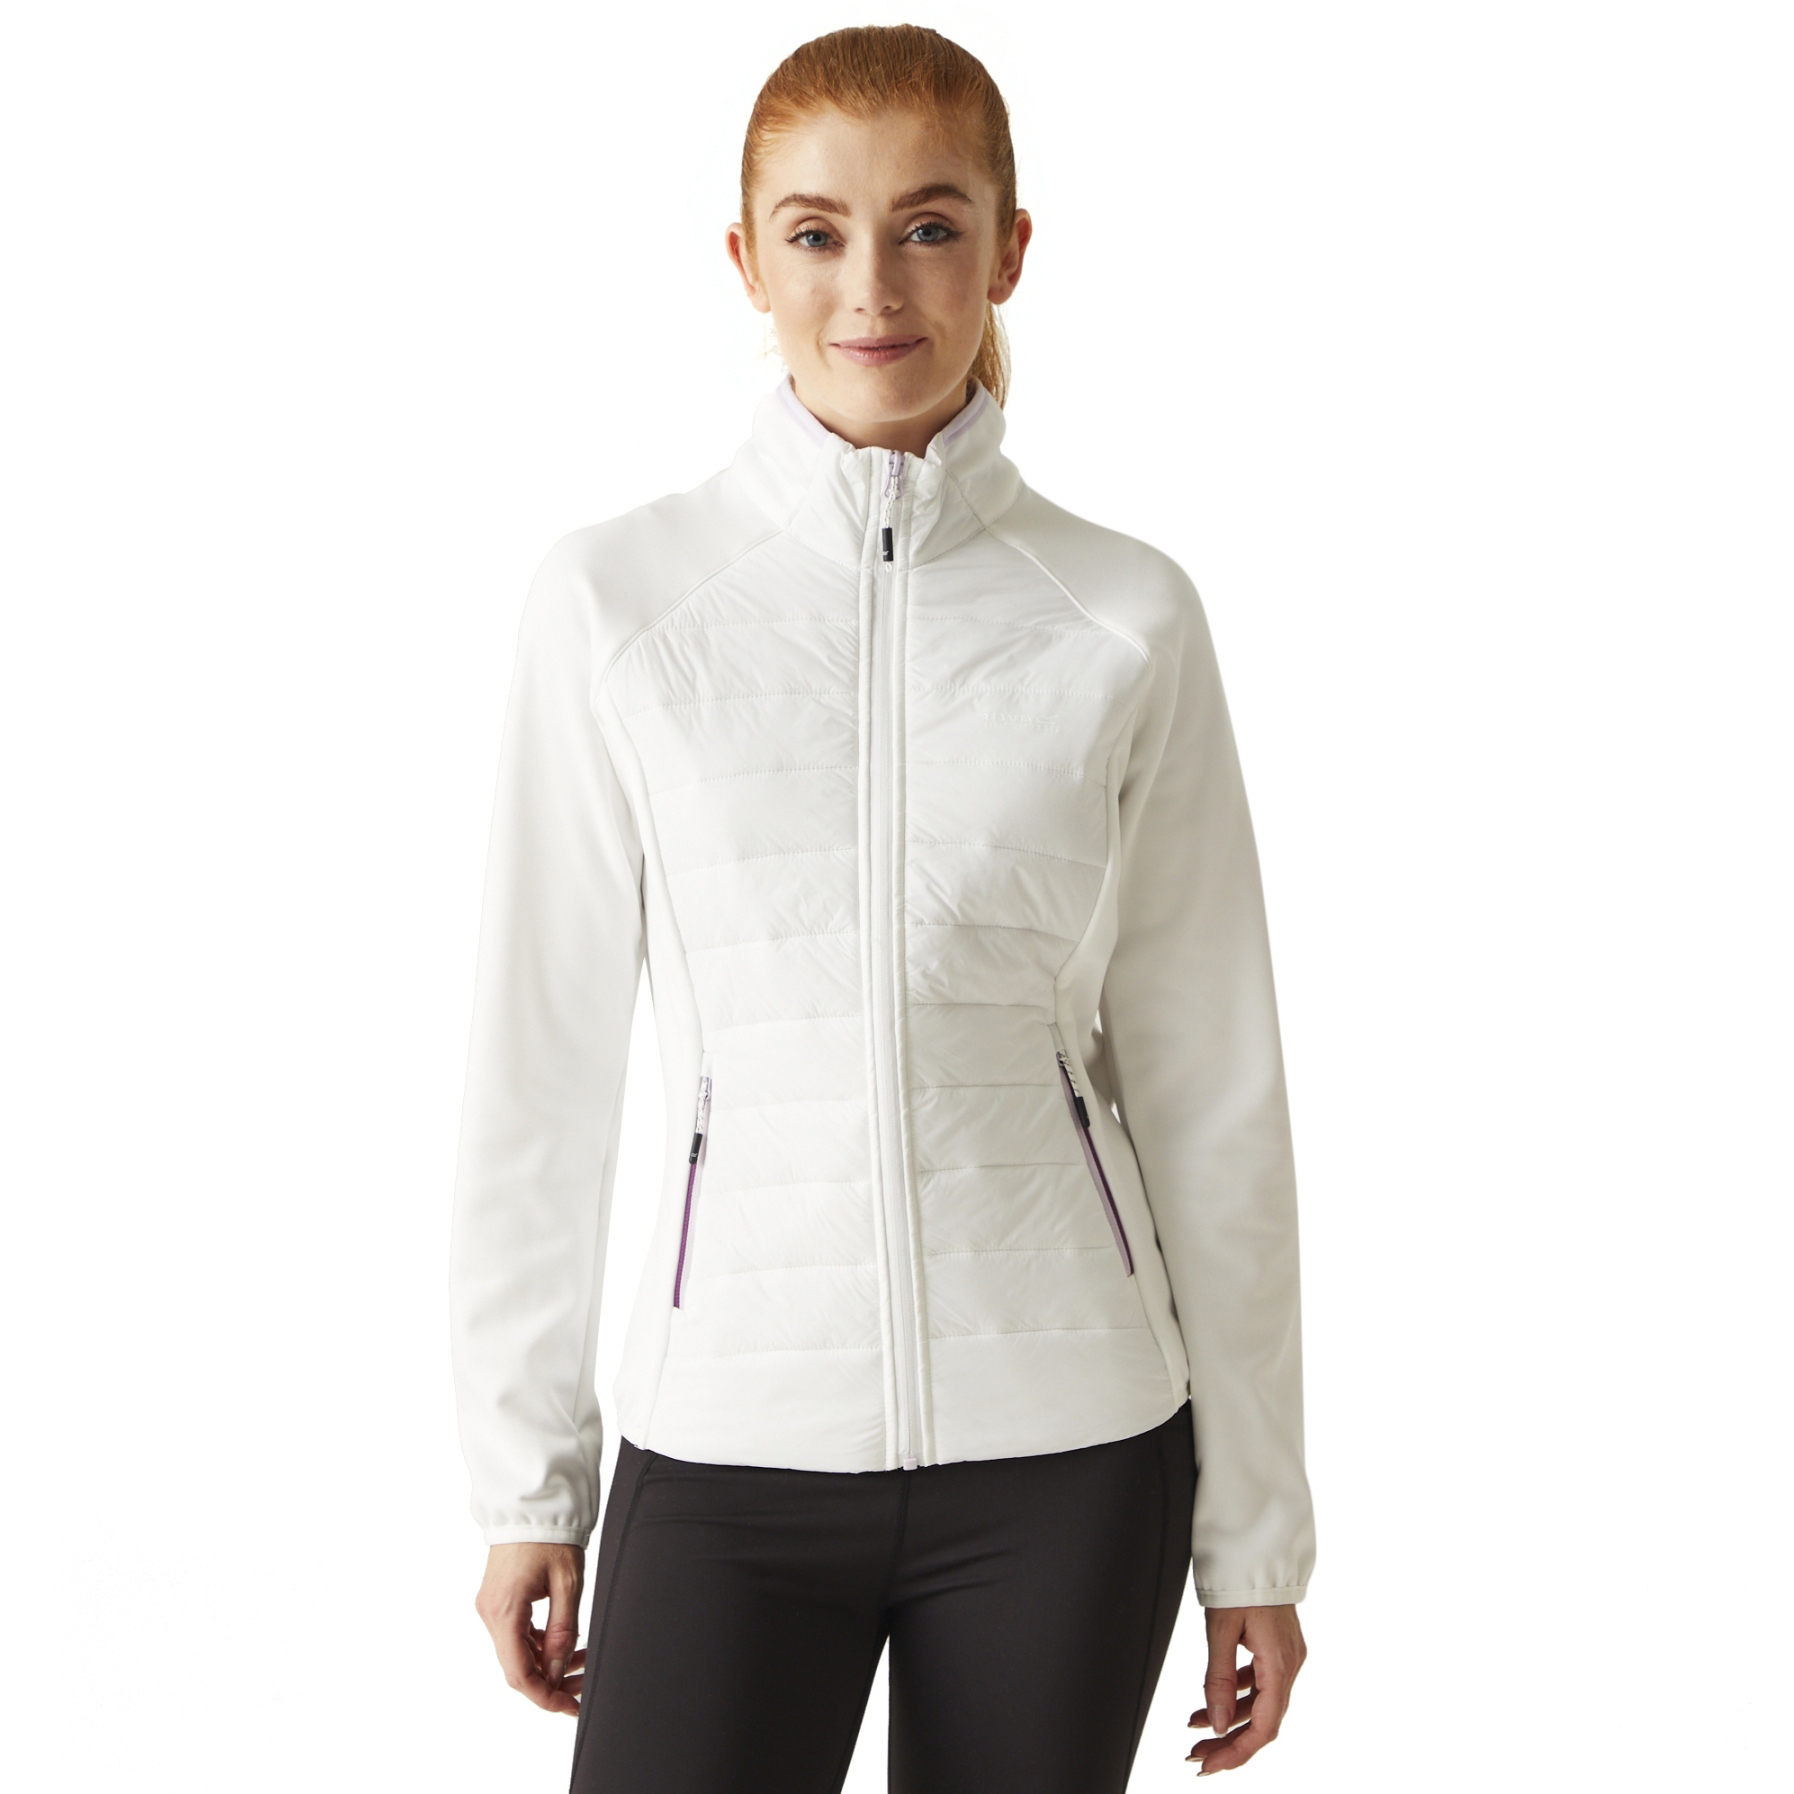 Produktbild von Regatta Clumber V Hybrid Jacke Damen - White/Lilac Frost LLW